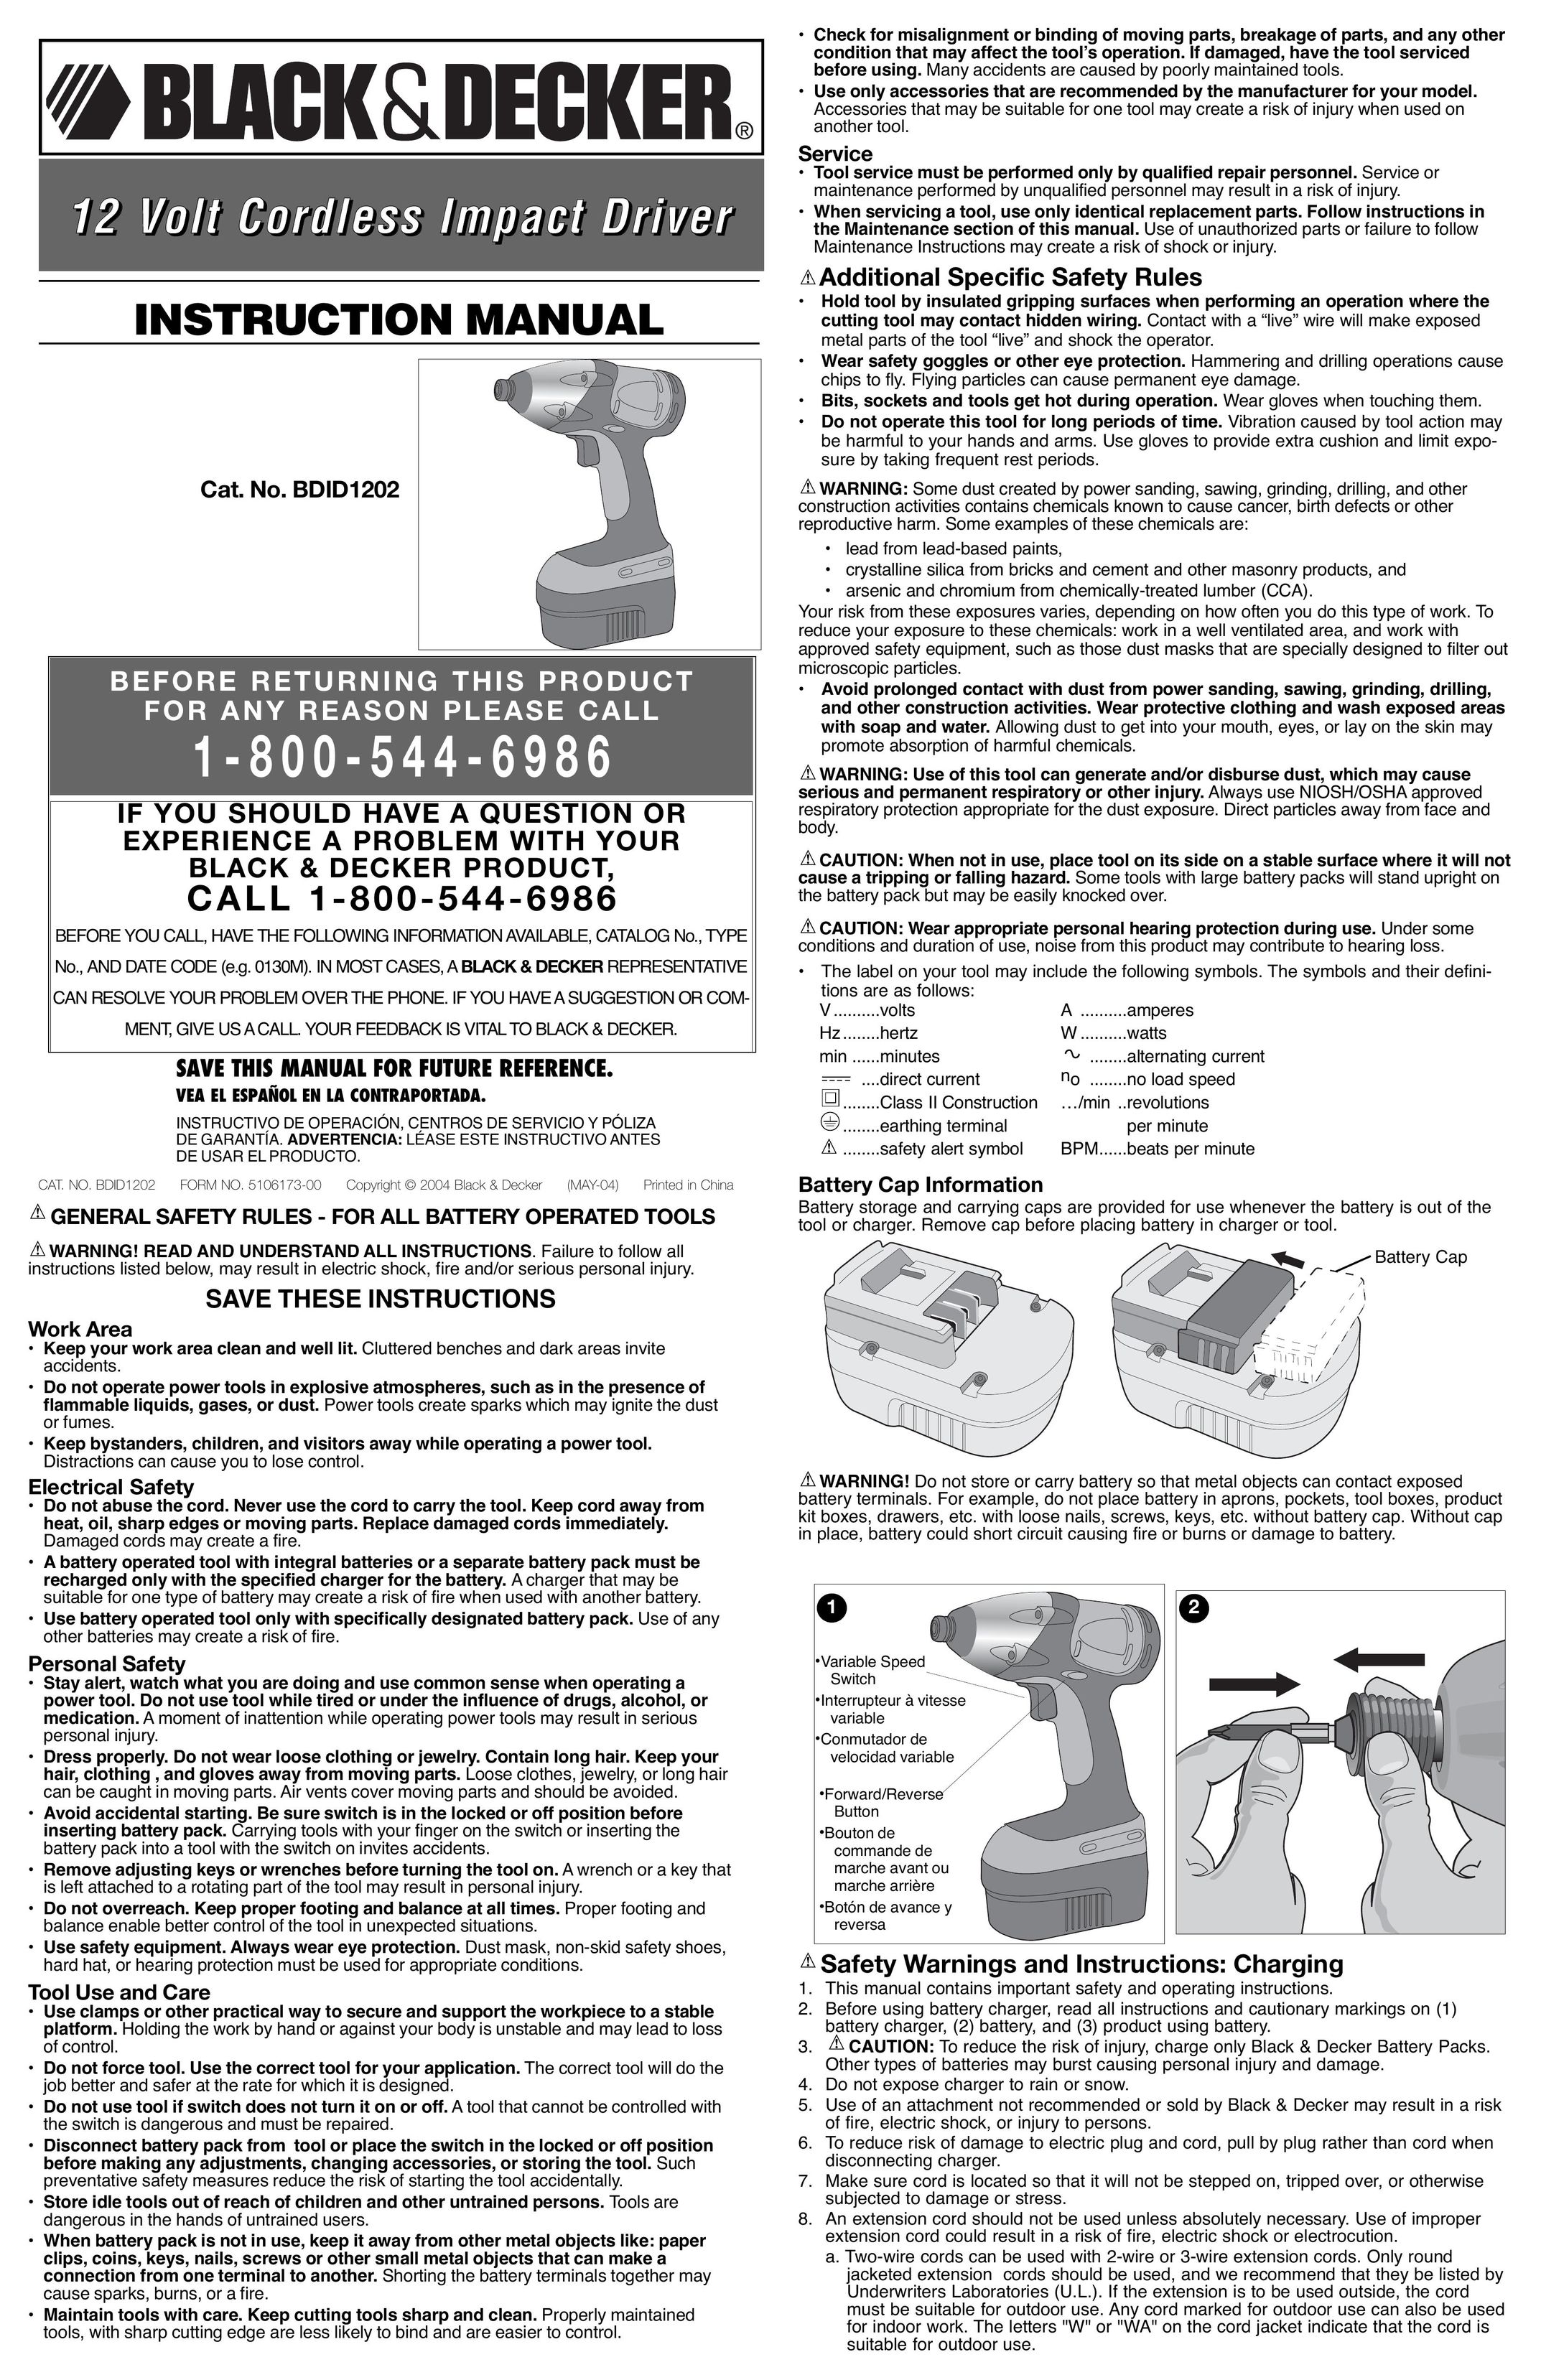 Black & Decker 5106173-00 Impact Driver User Manual